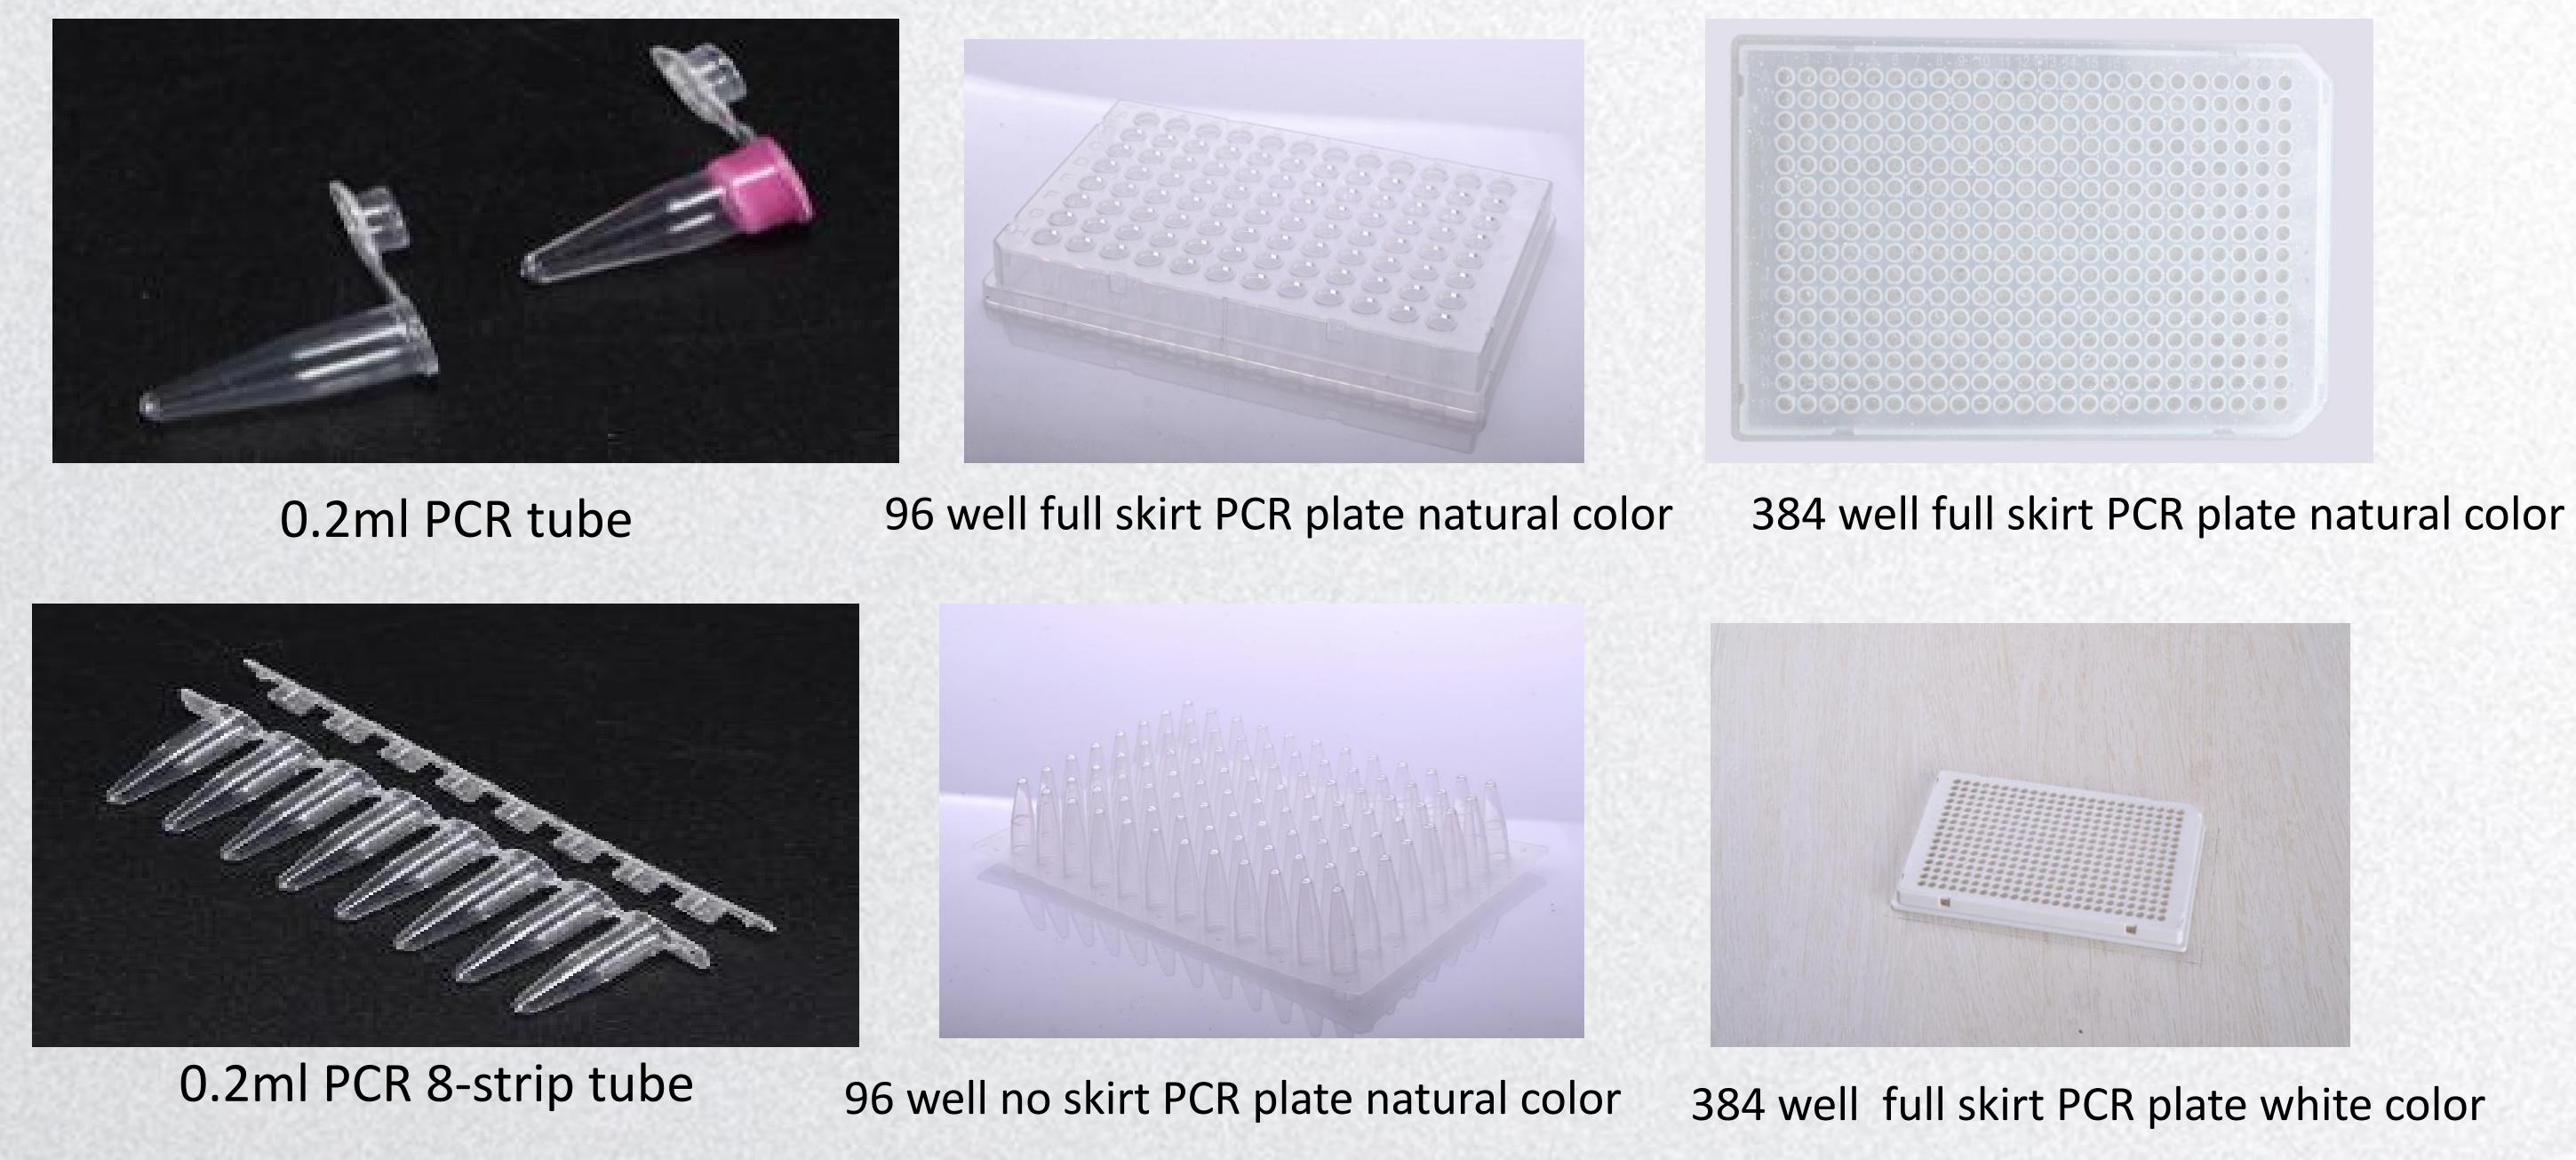 PCR consumables